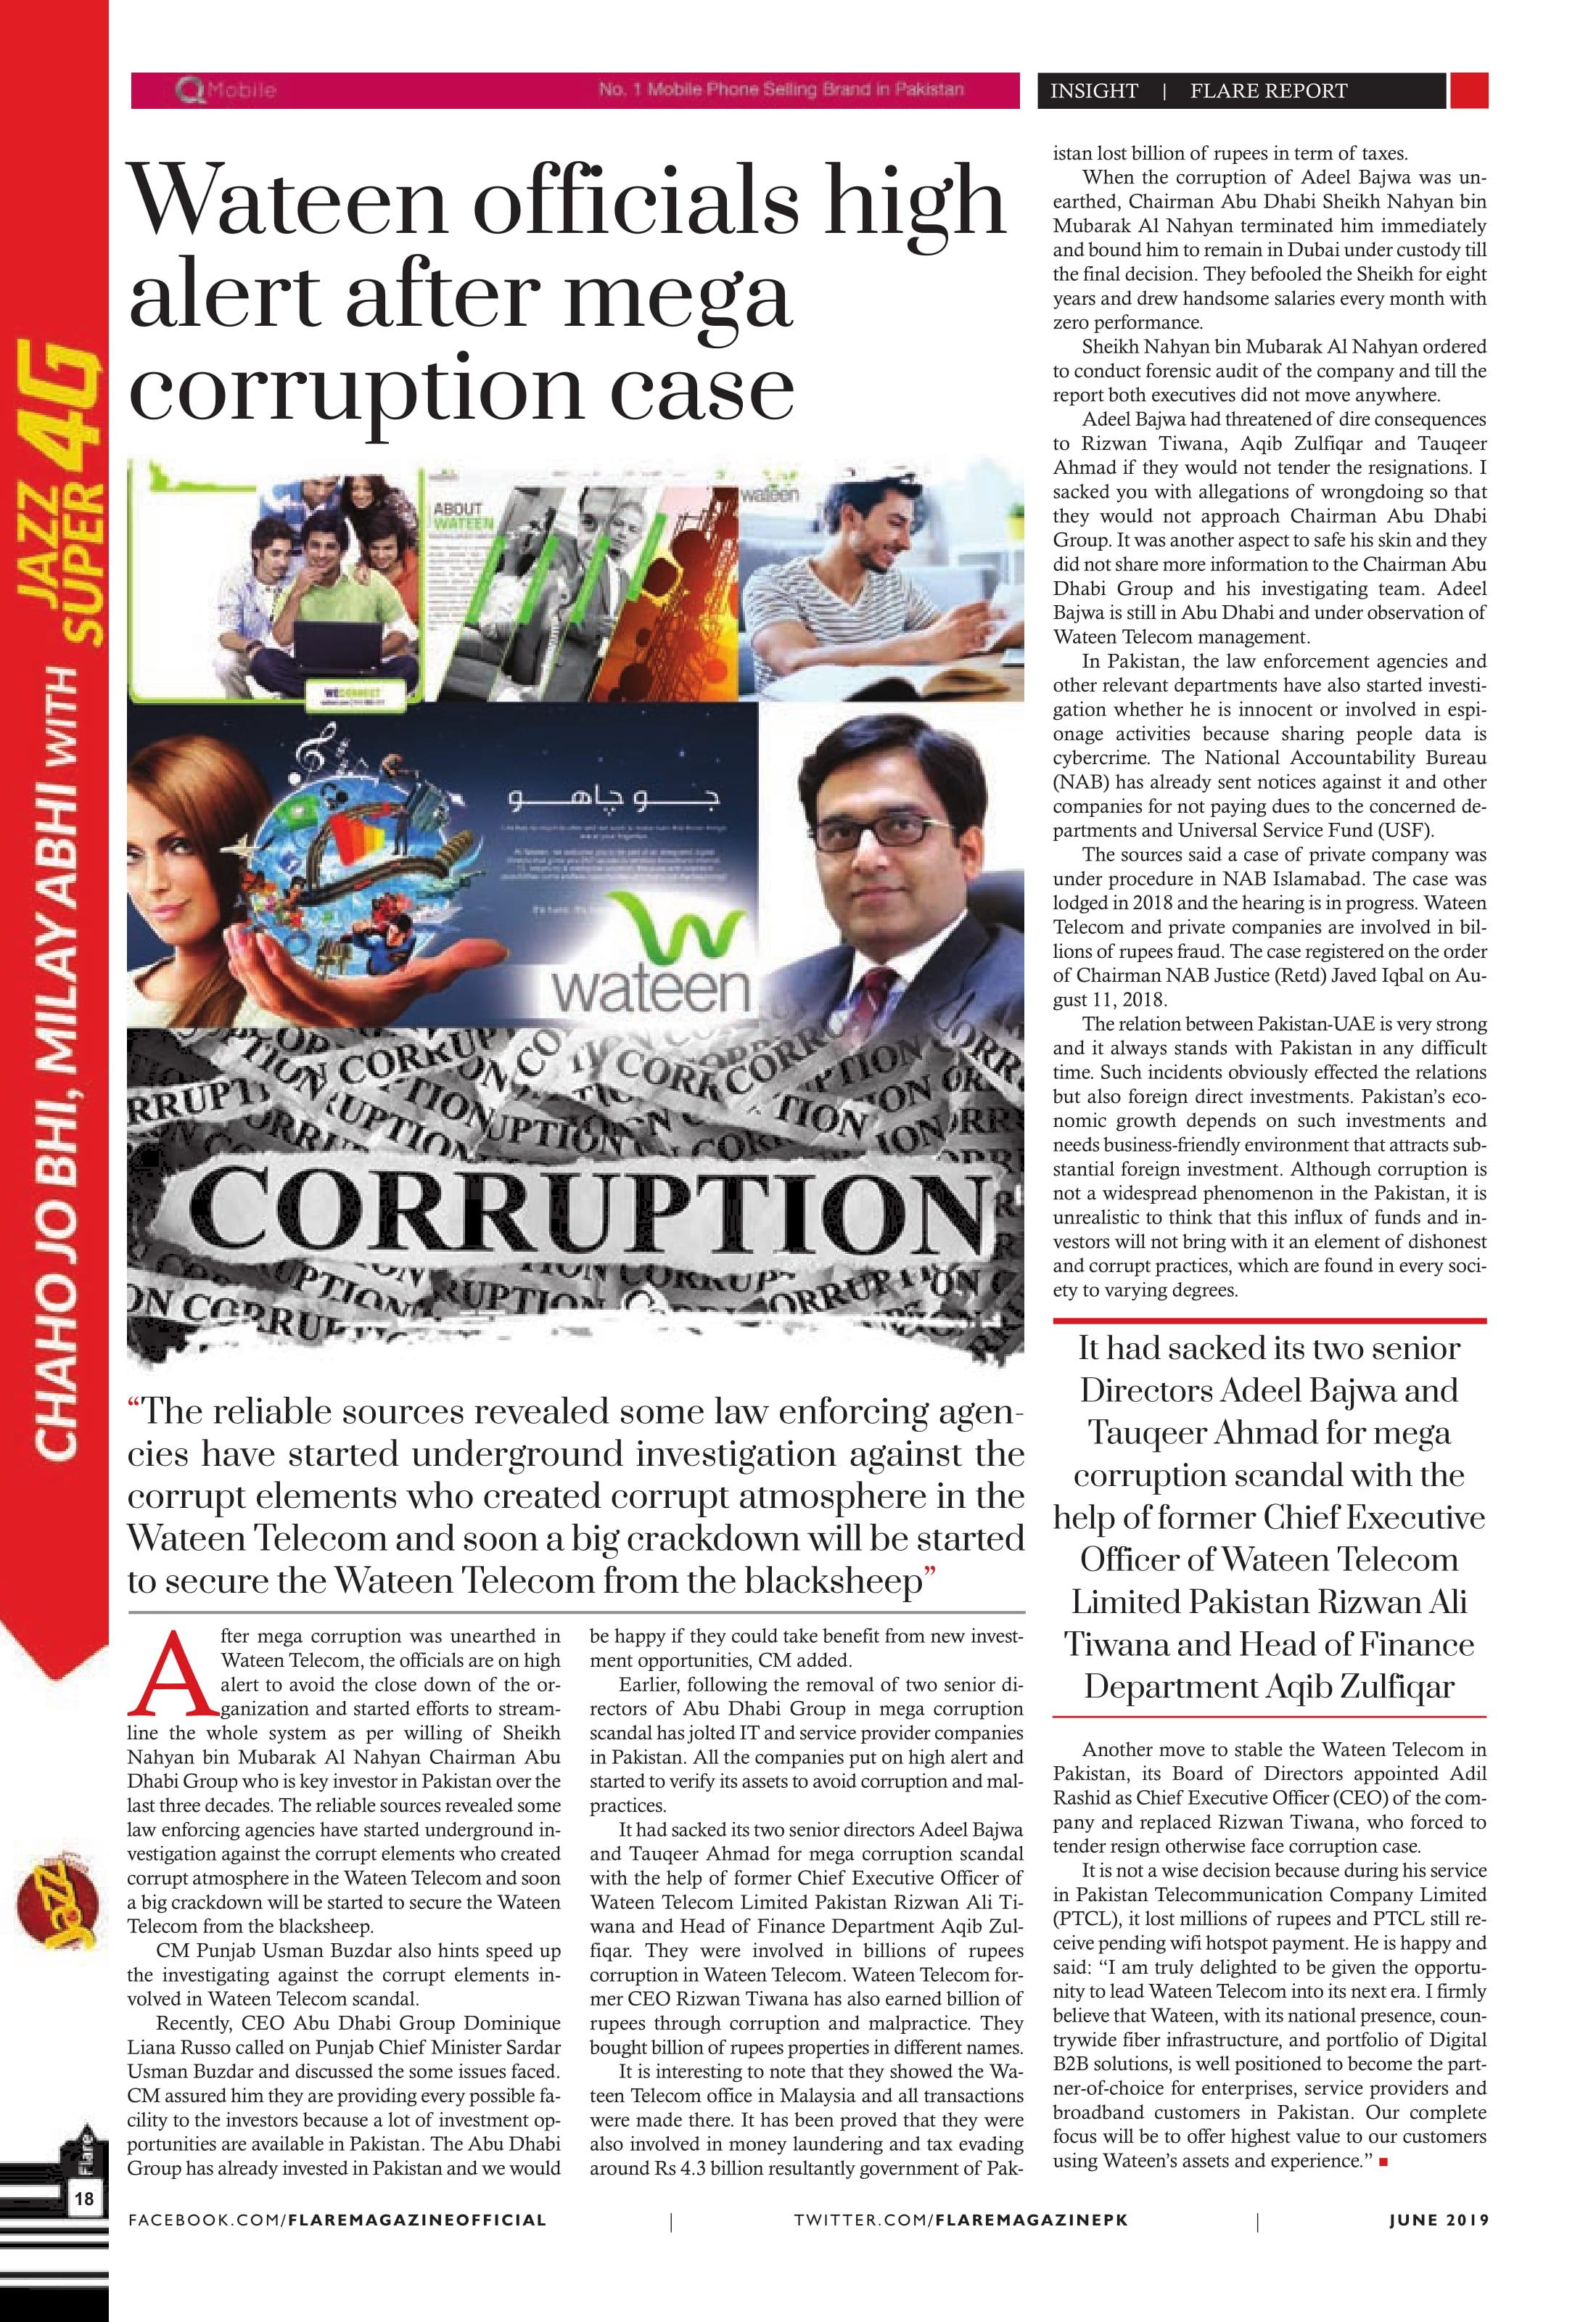 Wateen officials high alert after mega corruption case